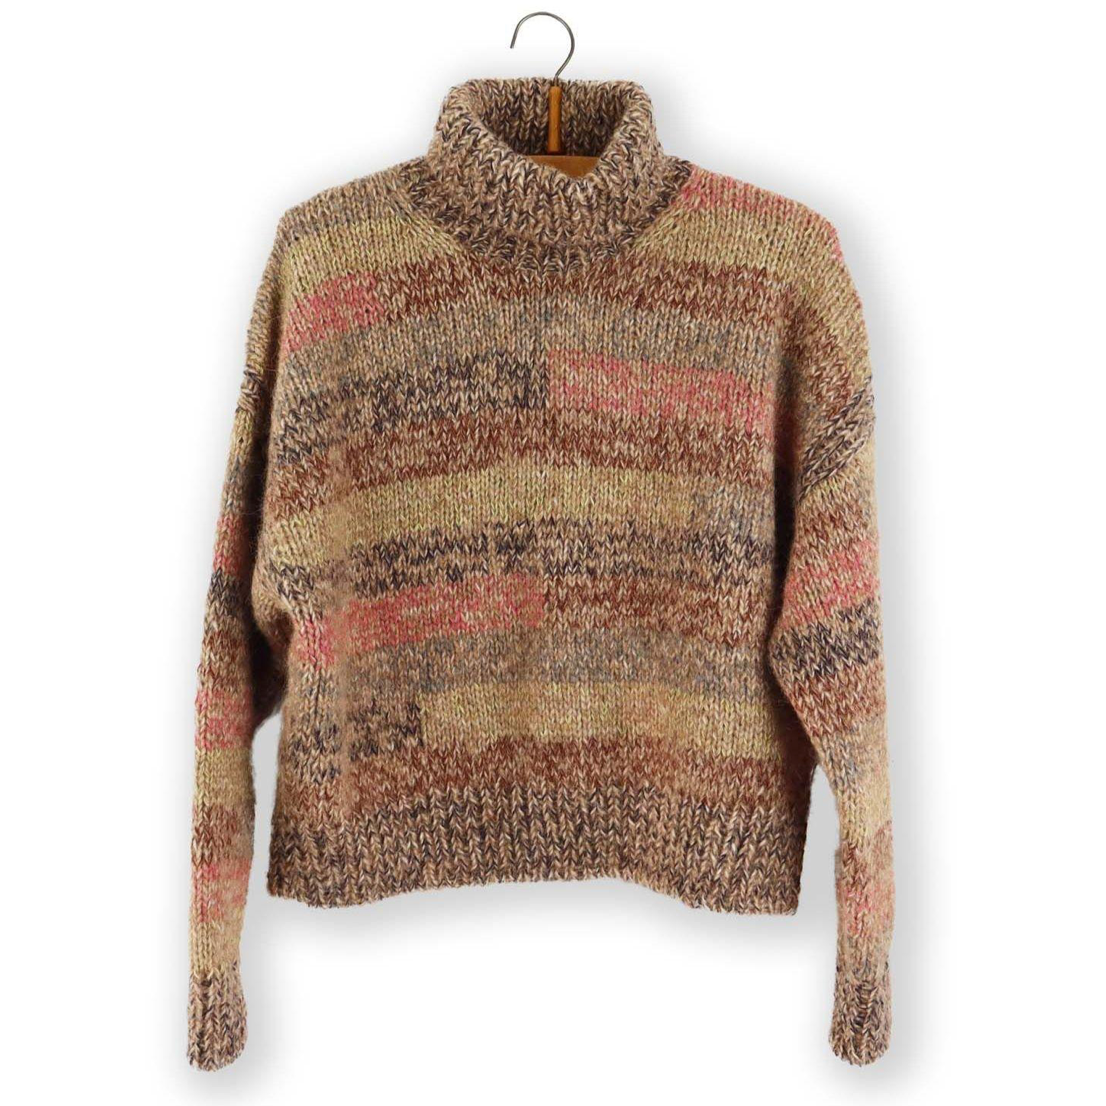 Brick Sweater Pattern Isager